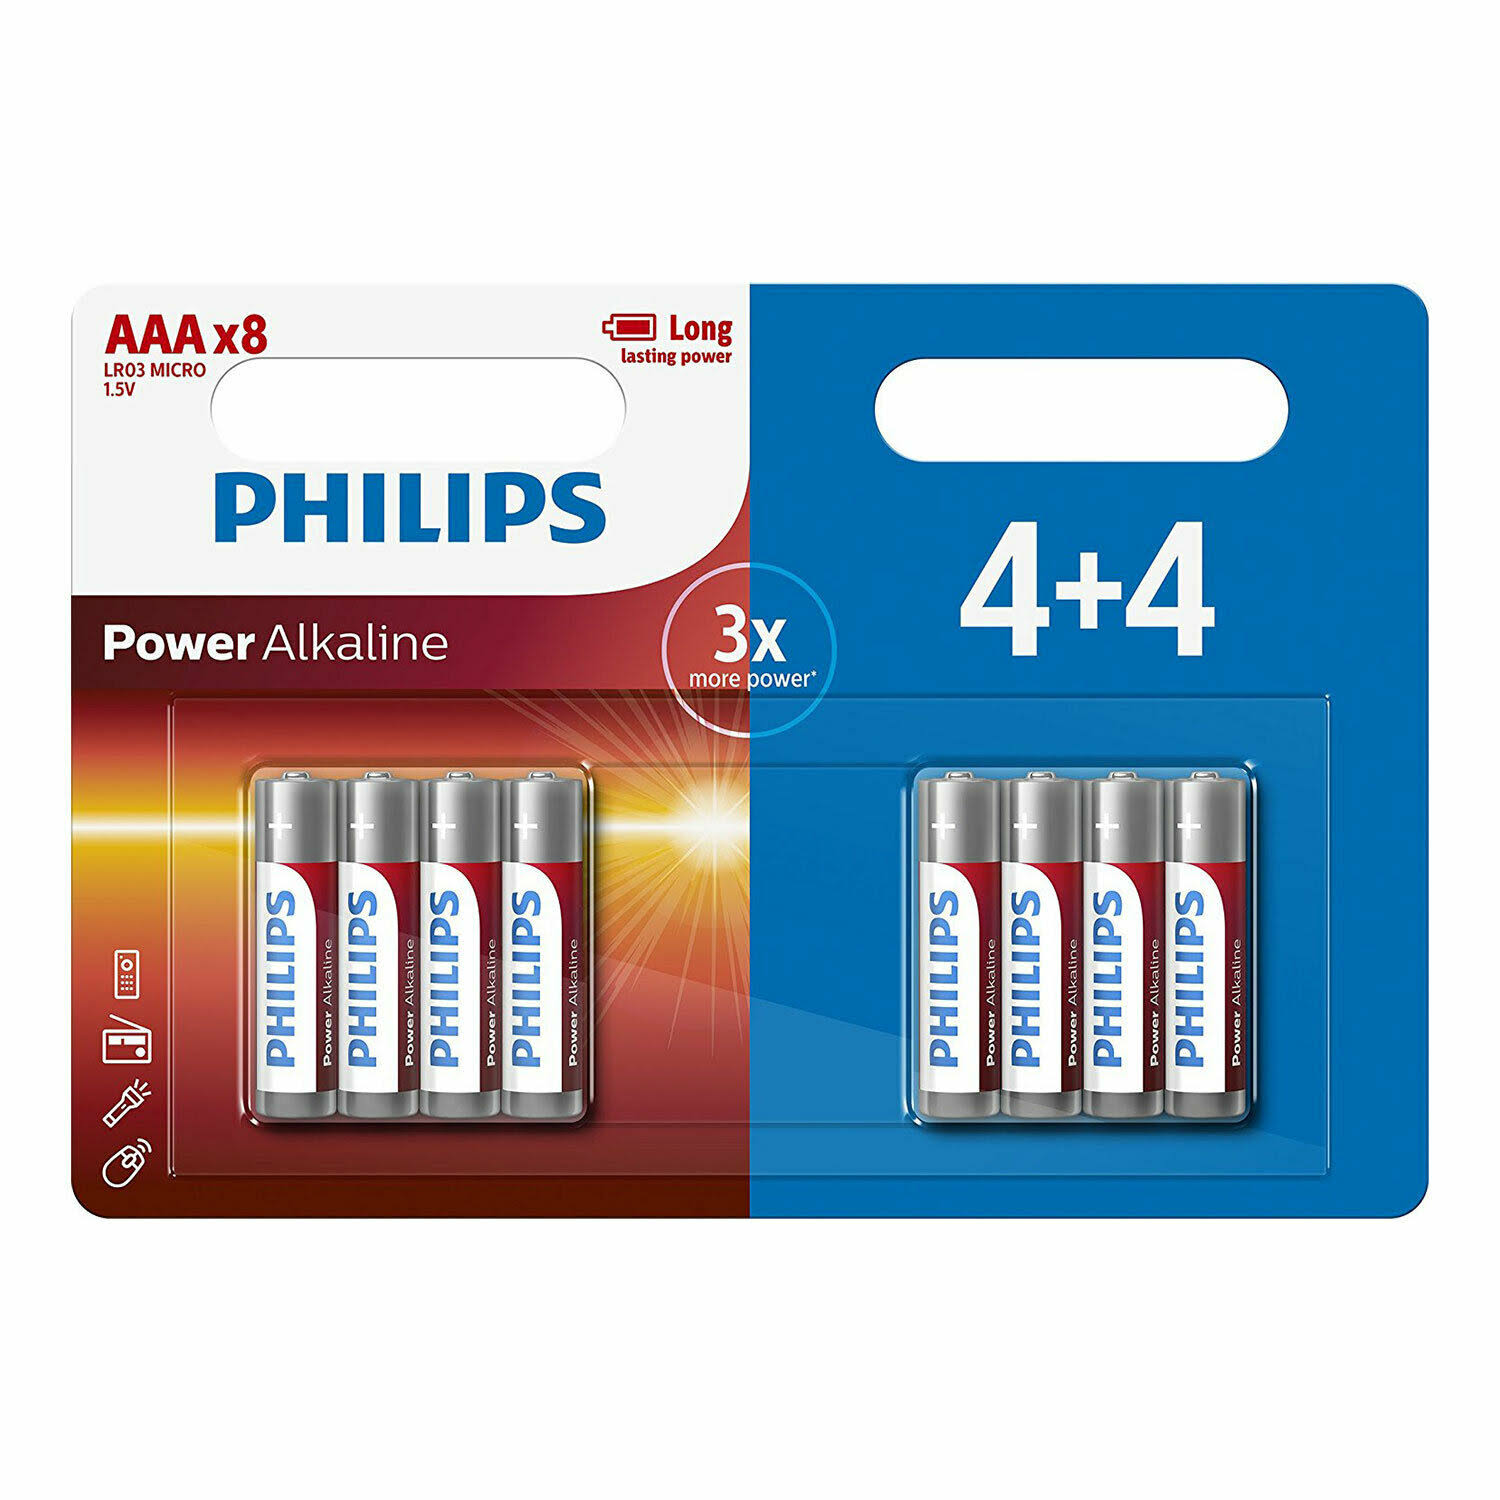 Philips Power Alkaline Battery - AAA